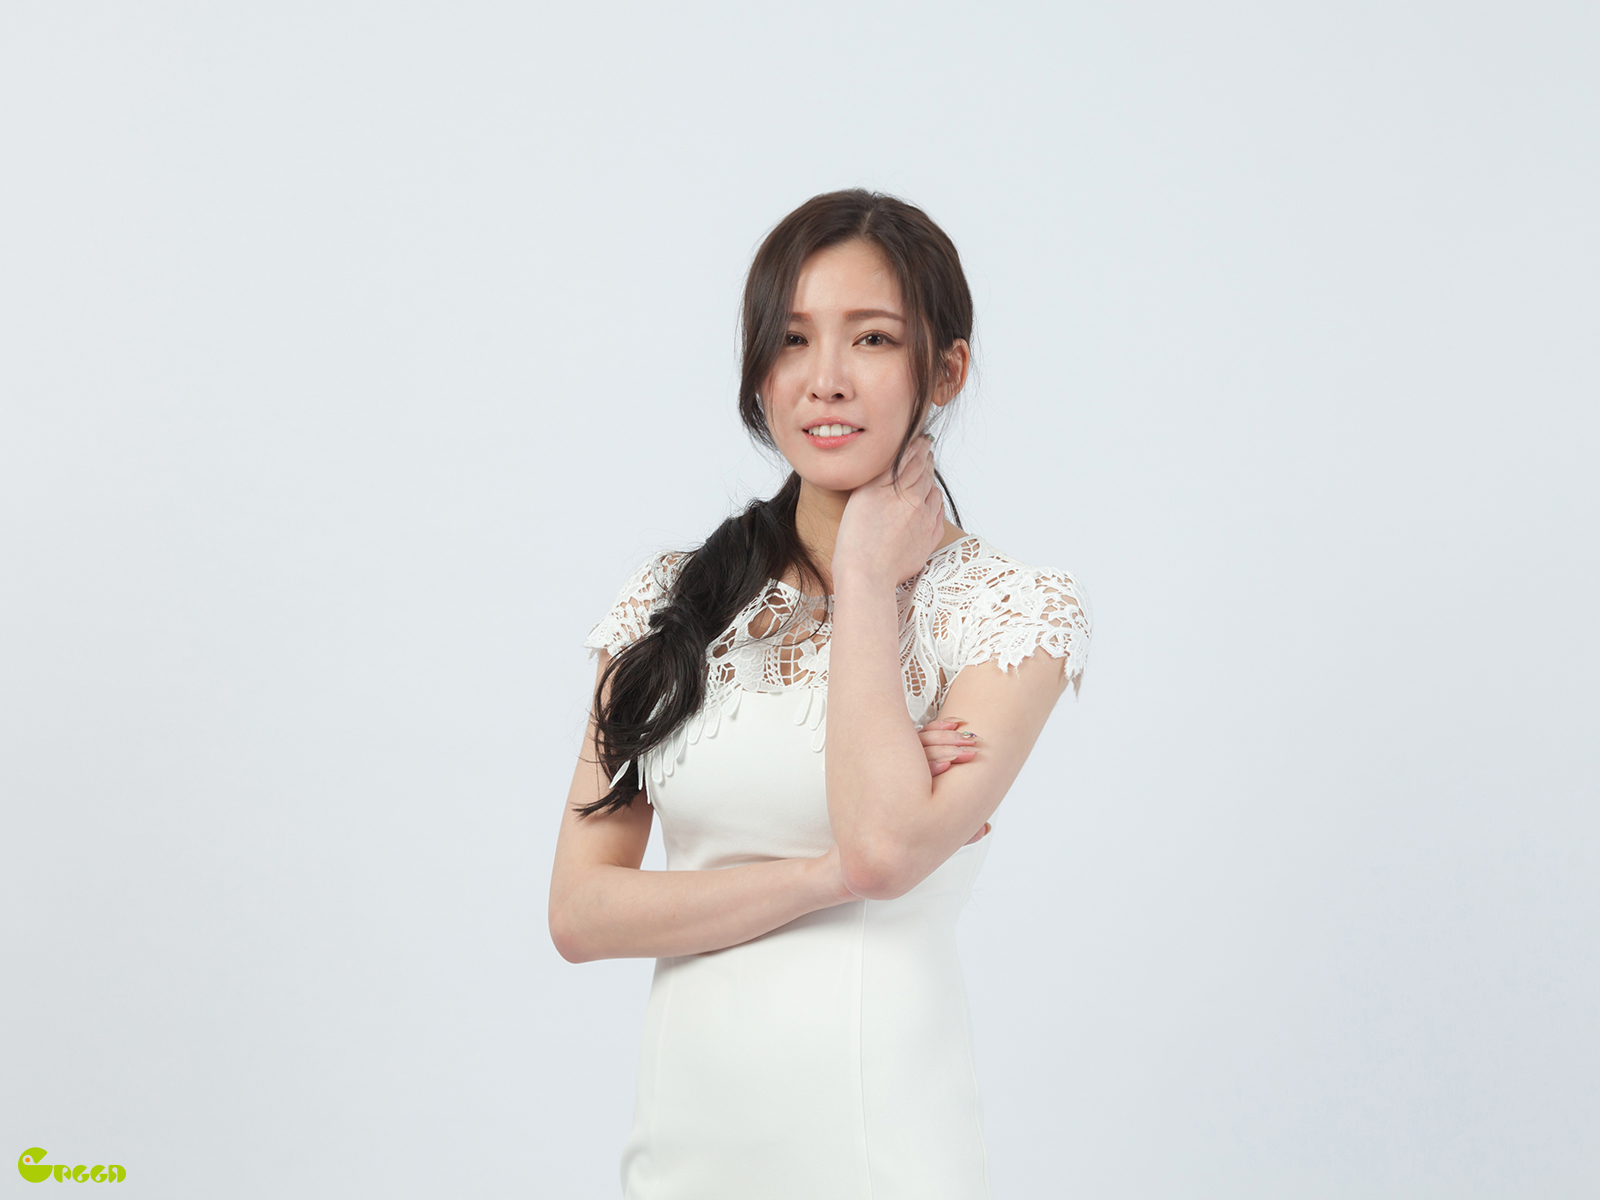 Model - 夏冰 - 休閒照(一) - 格林藝能Green Model Agency Taiwan